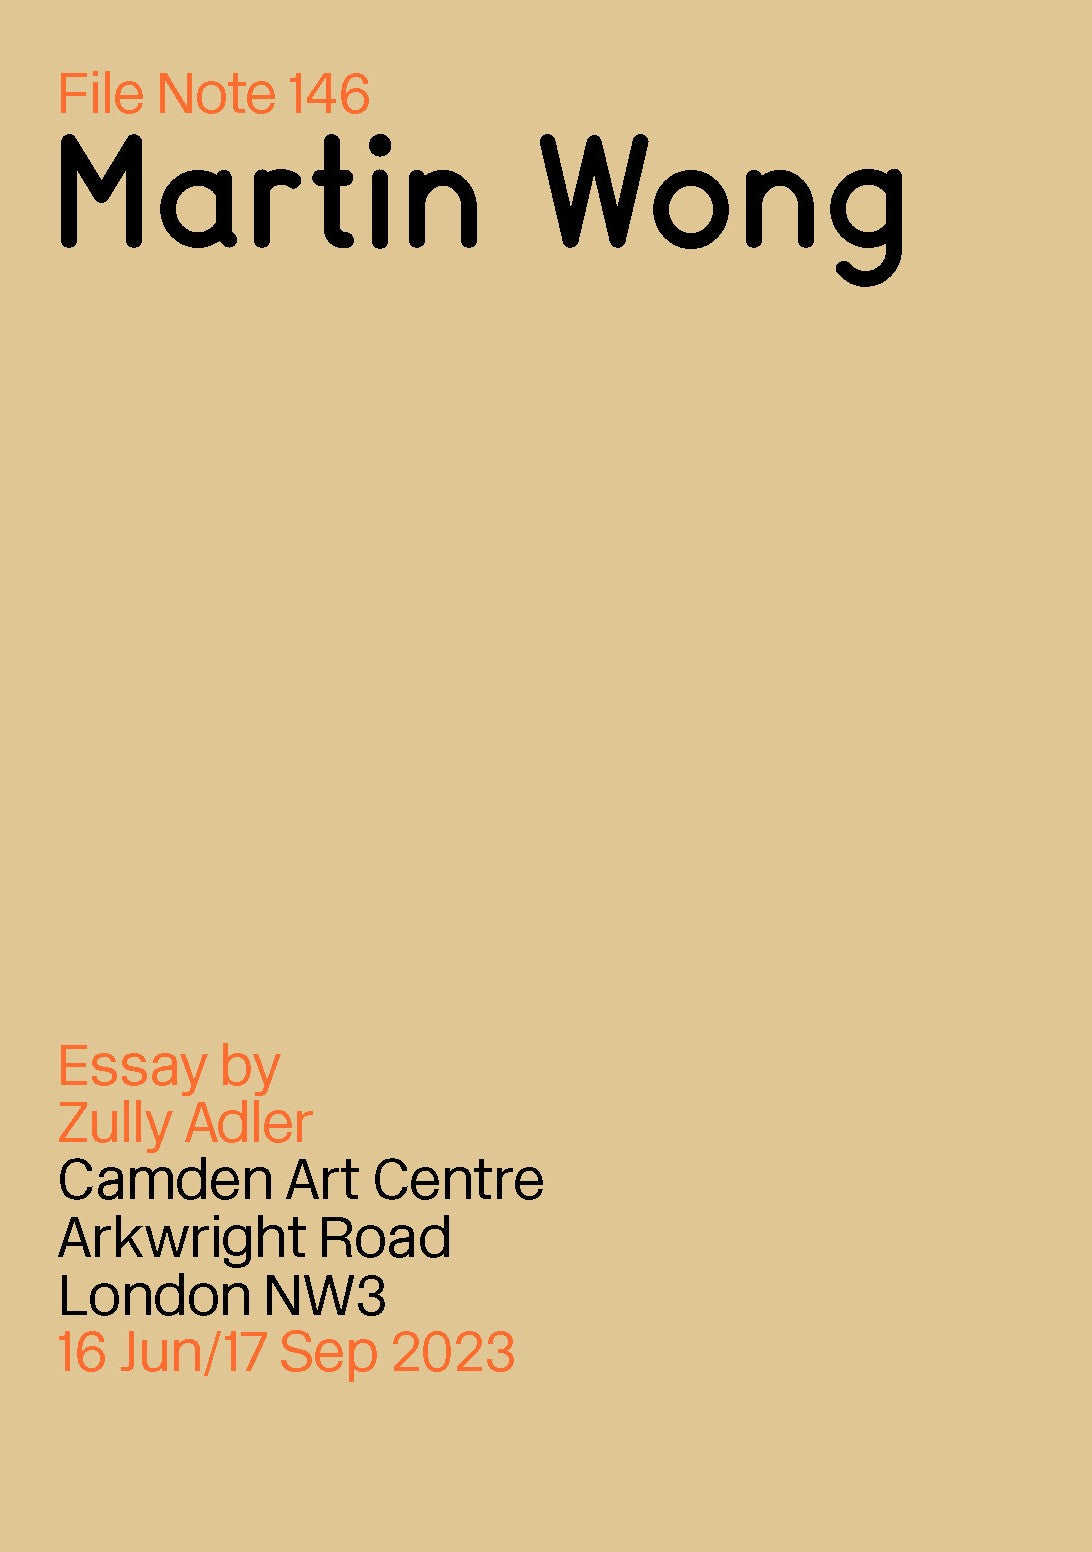 File Note 146, Martin Wong